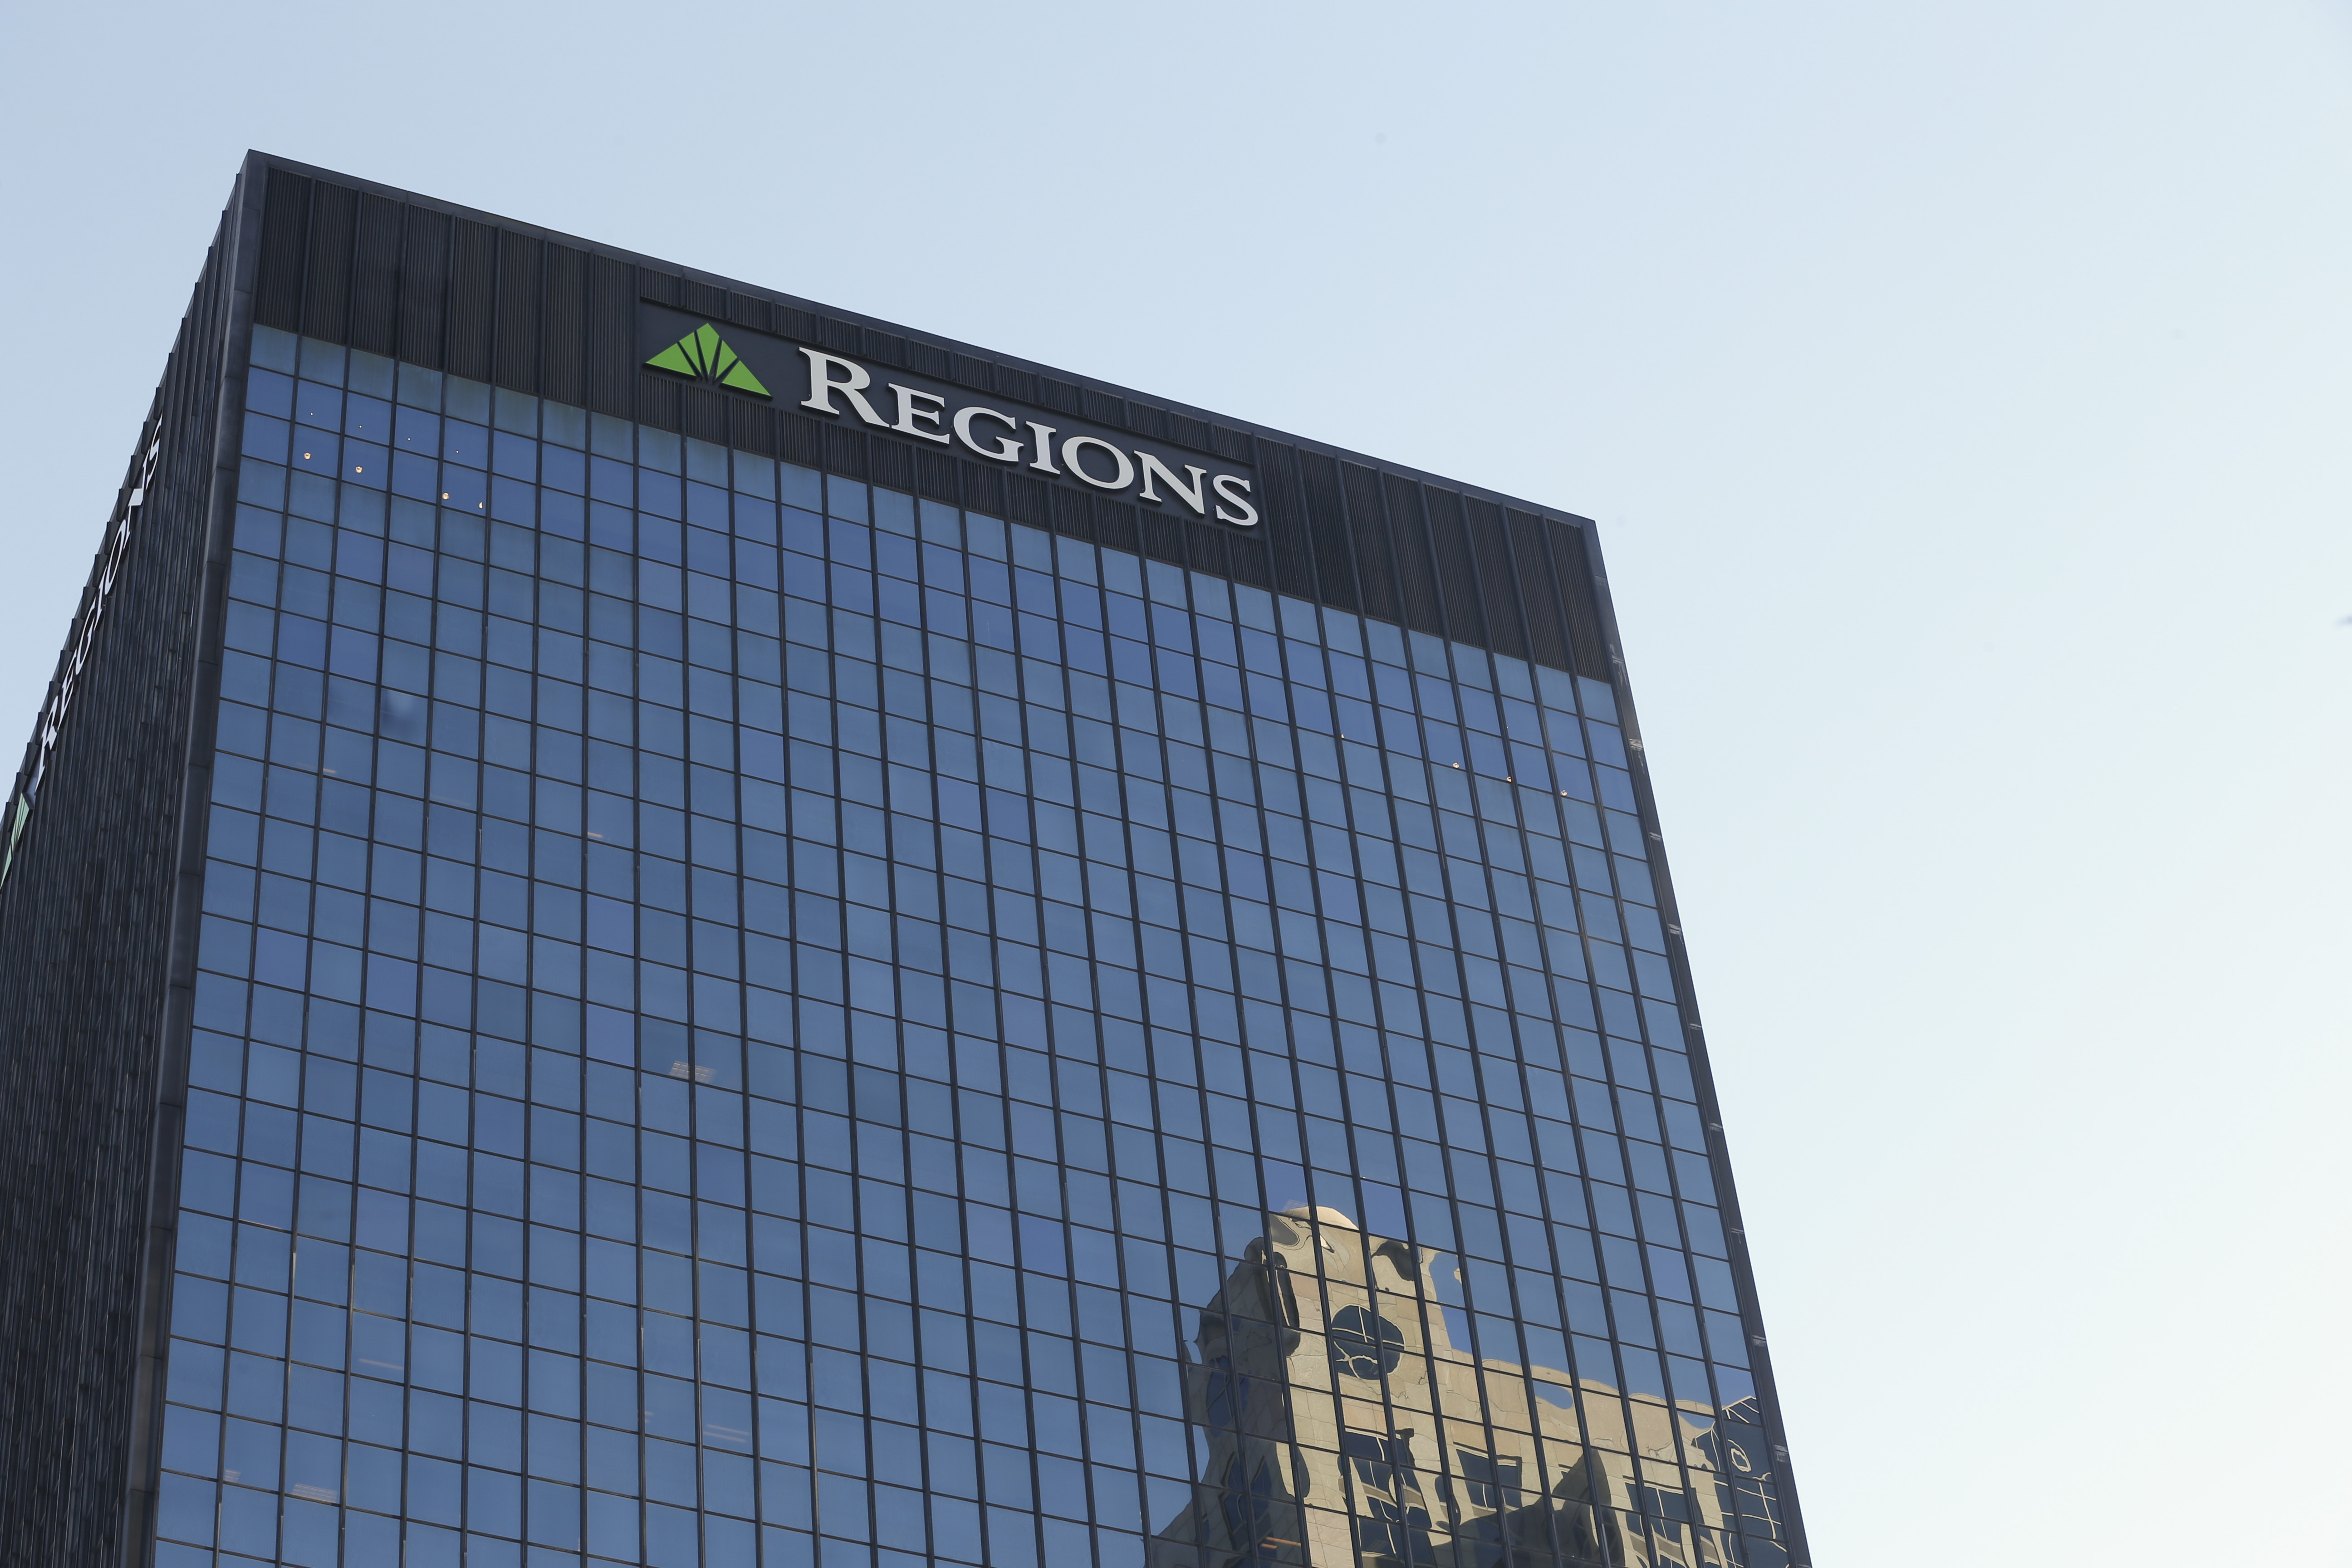 Regions Bank headquarters in Birmingham Alabama